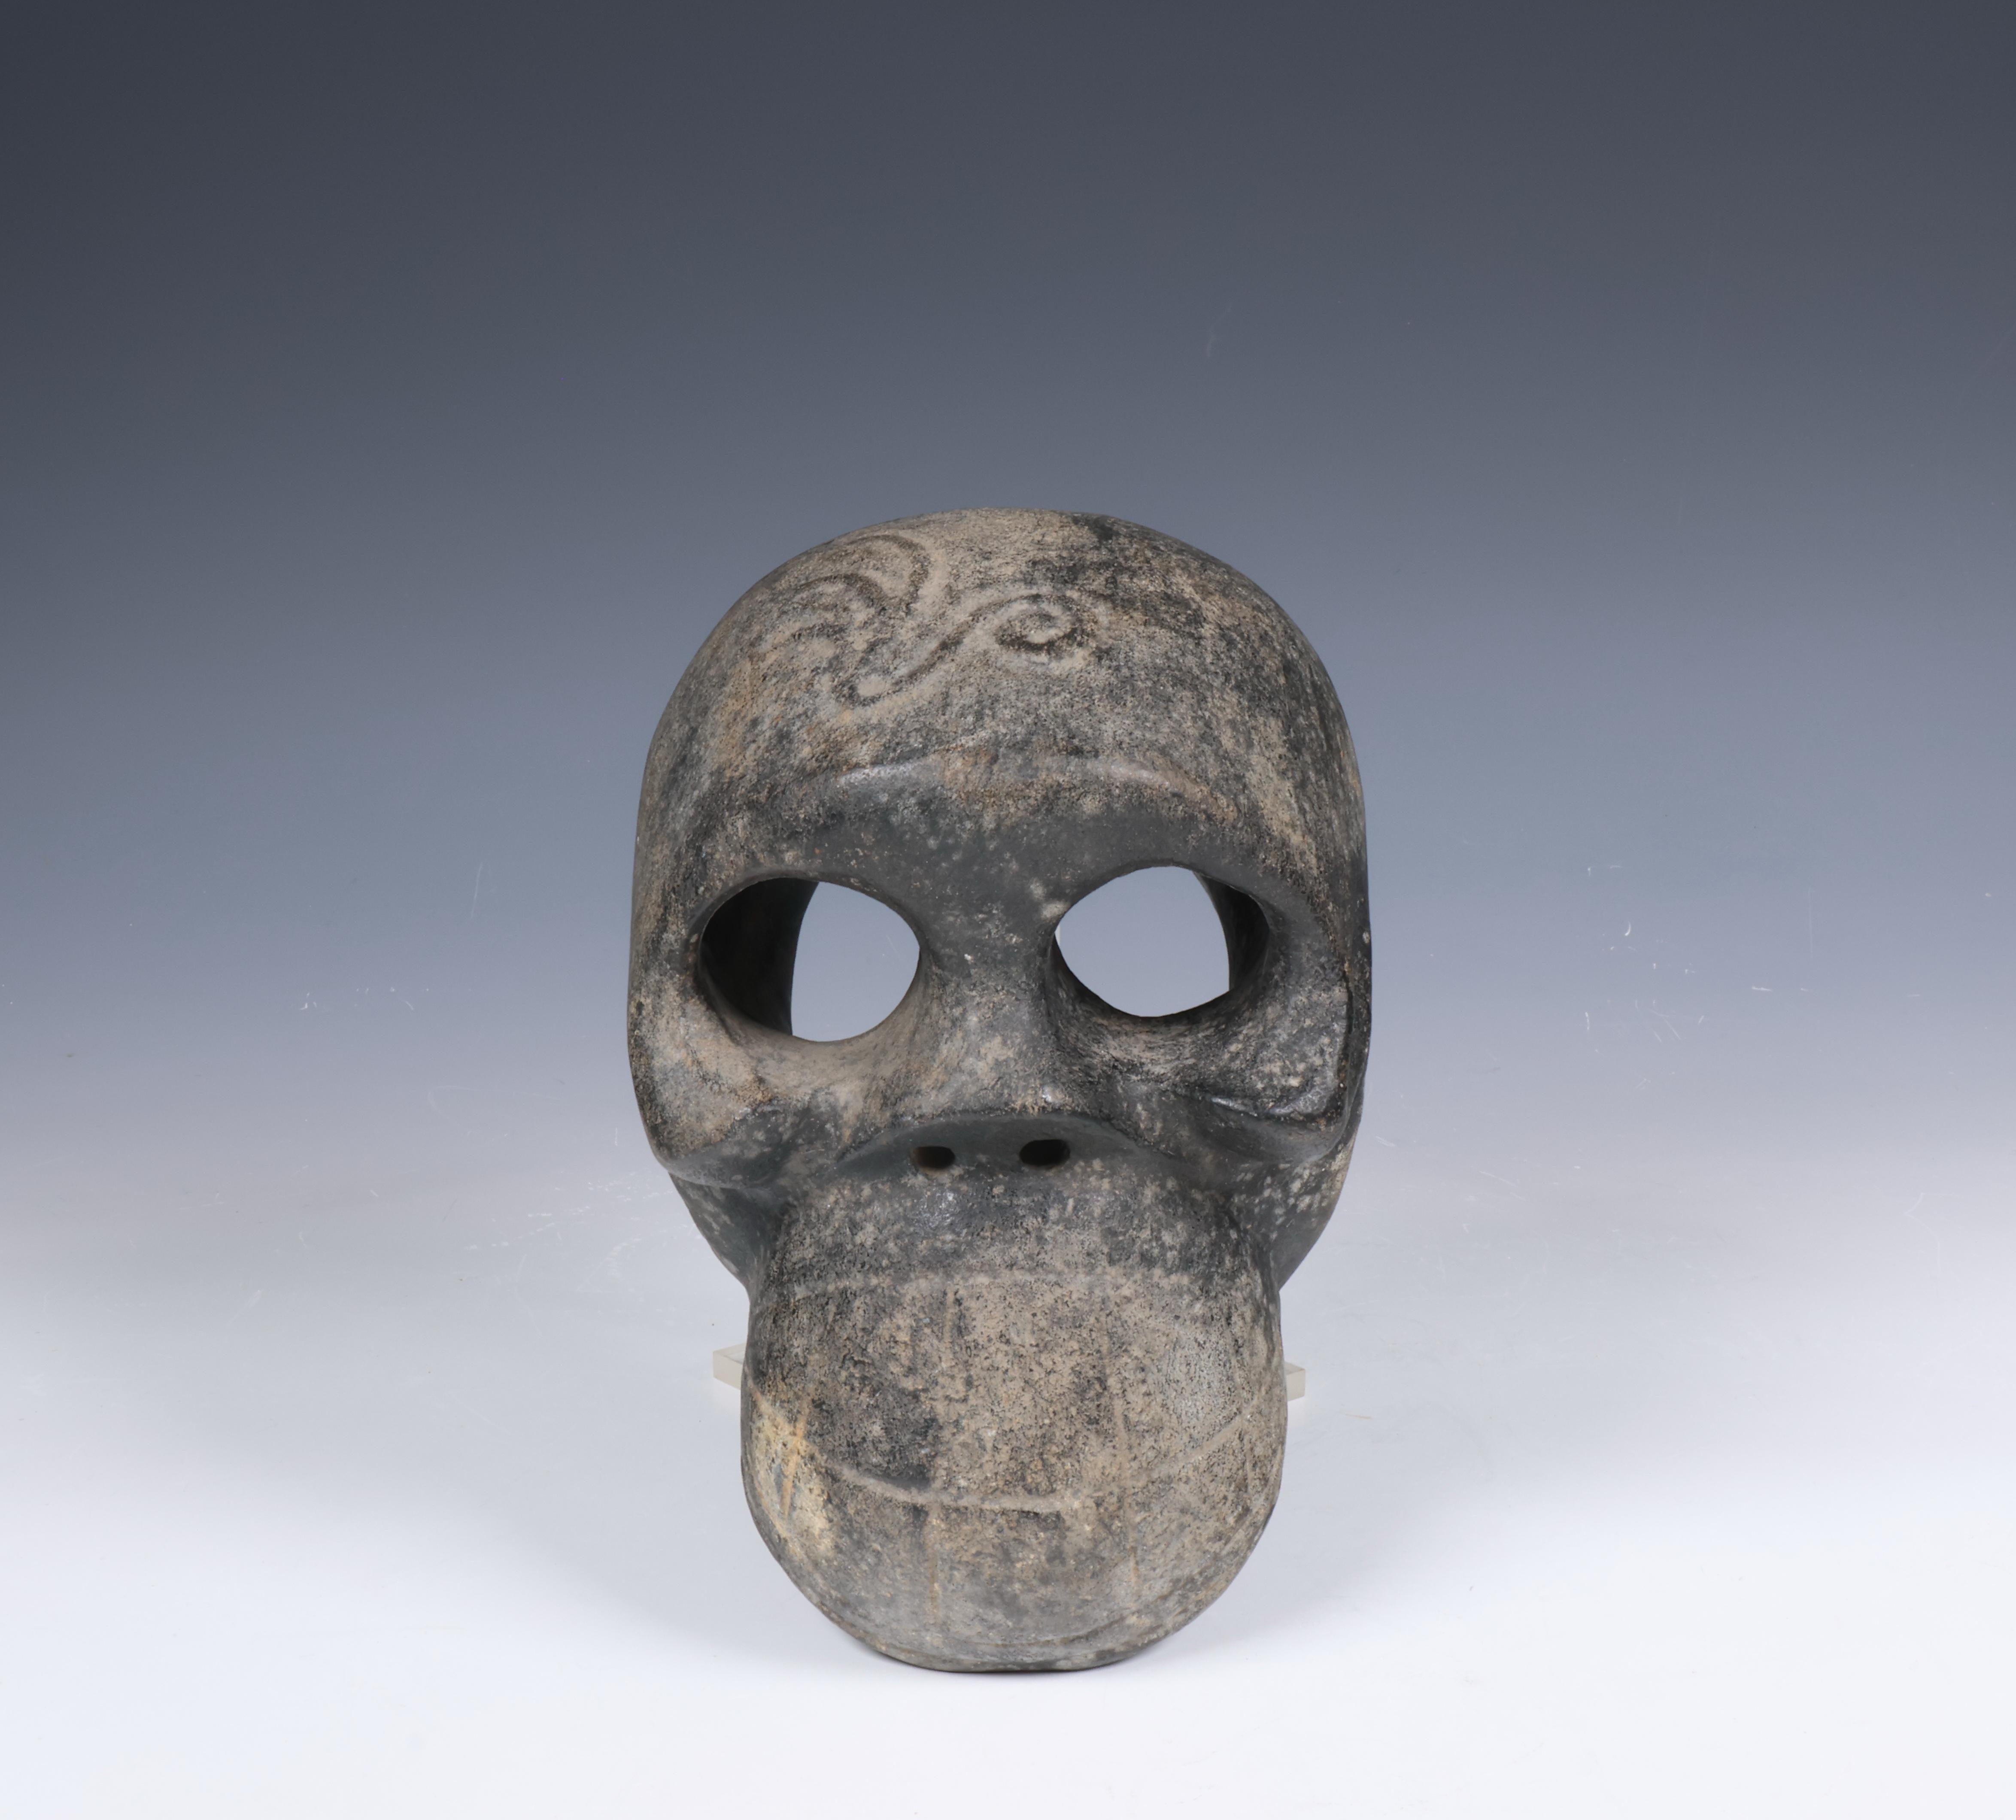 China, black stone model of a skull,